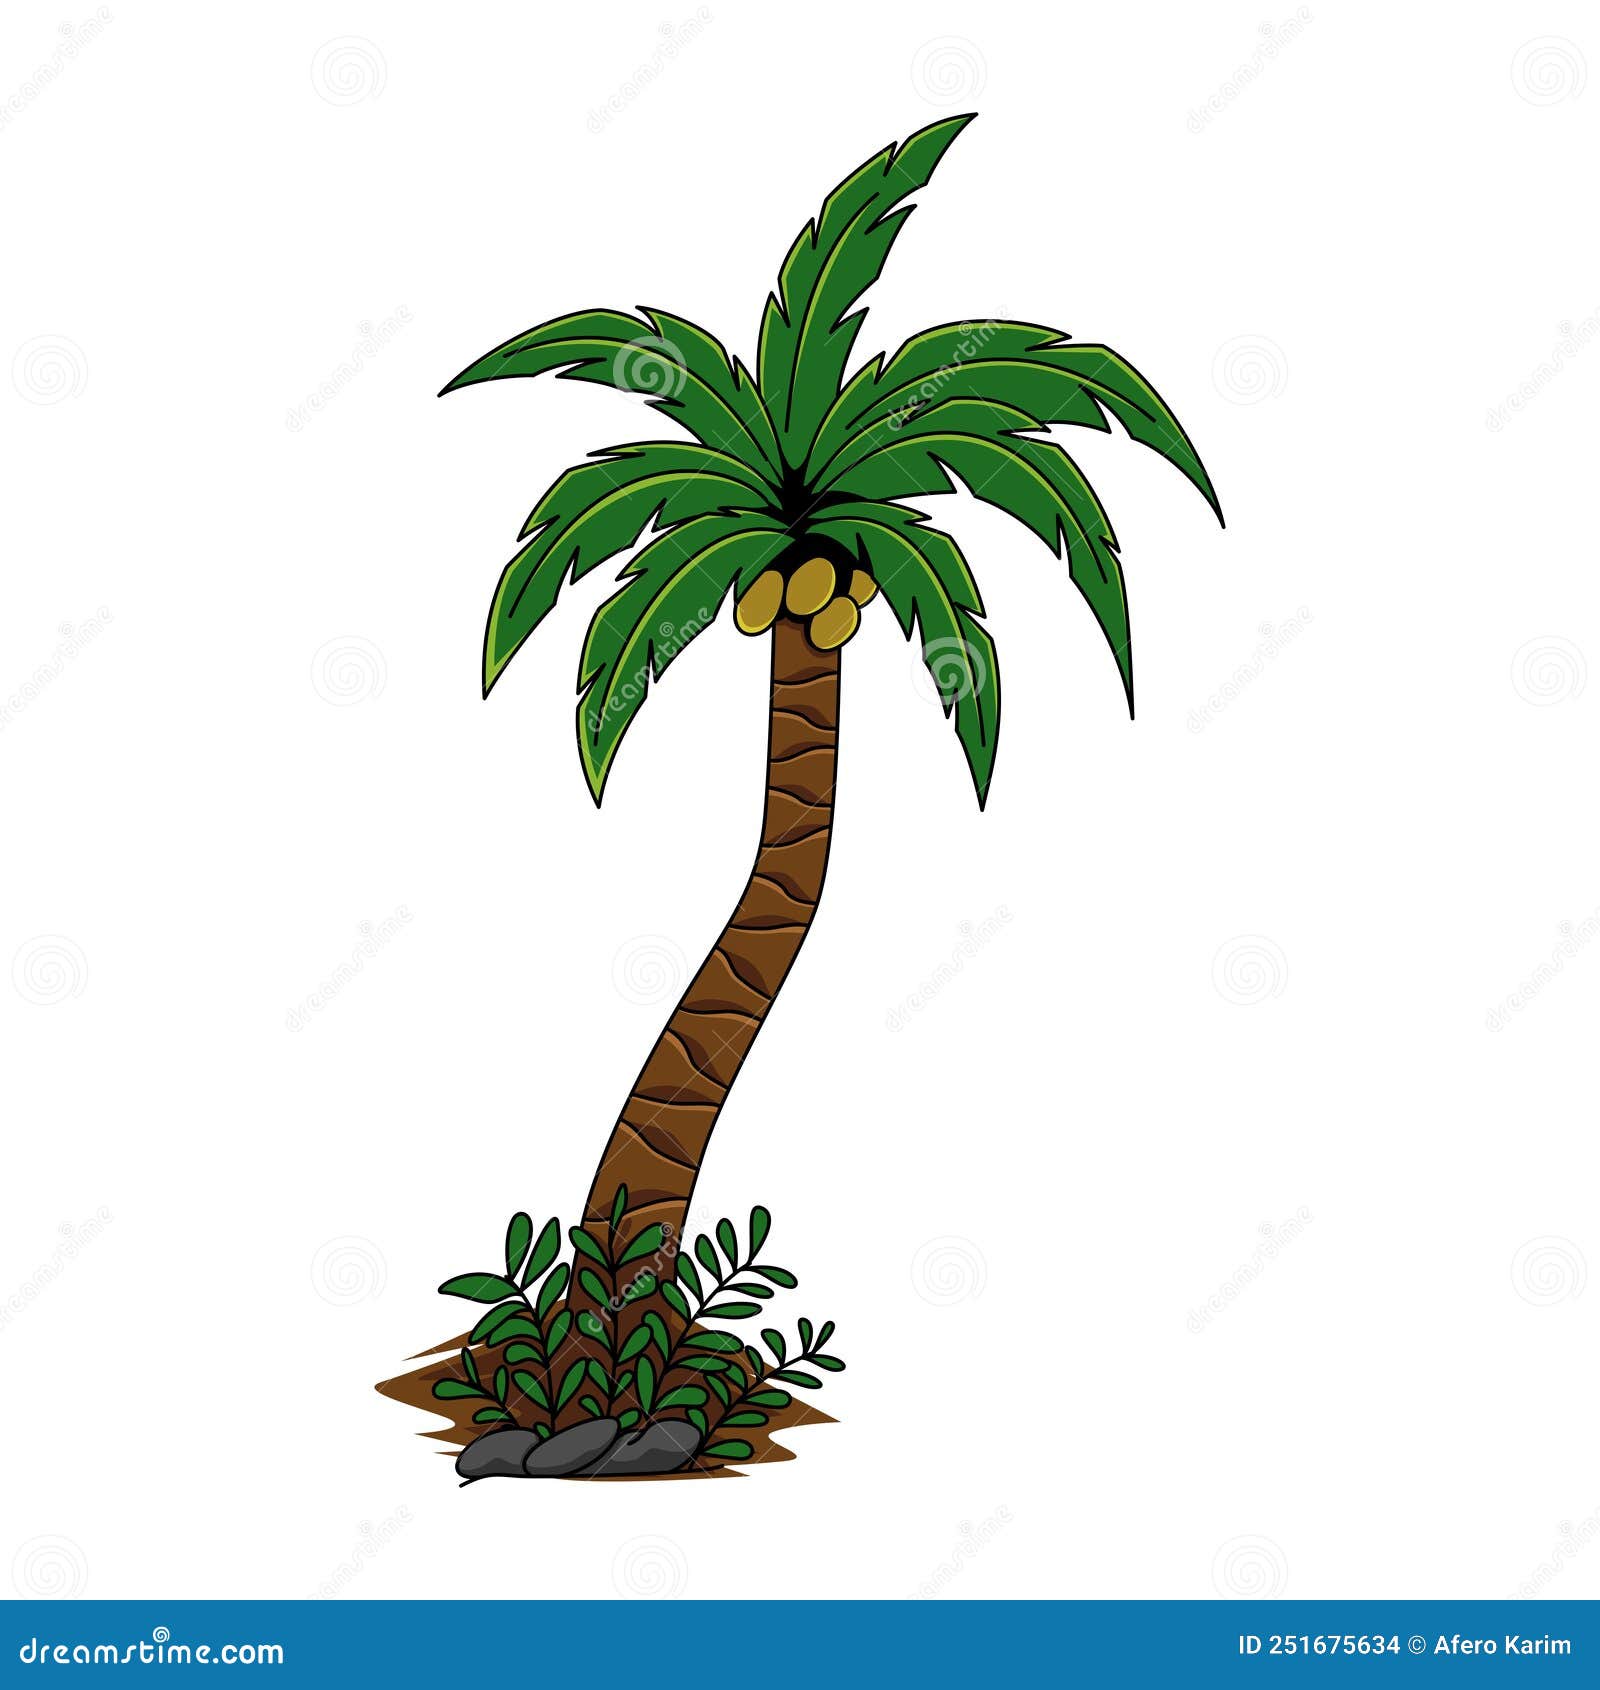 Coconut tree illustration stock vector. Illustration of element - 251675634